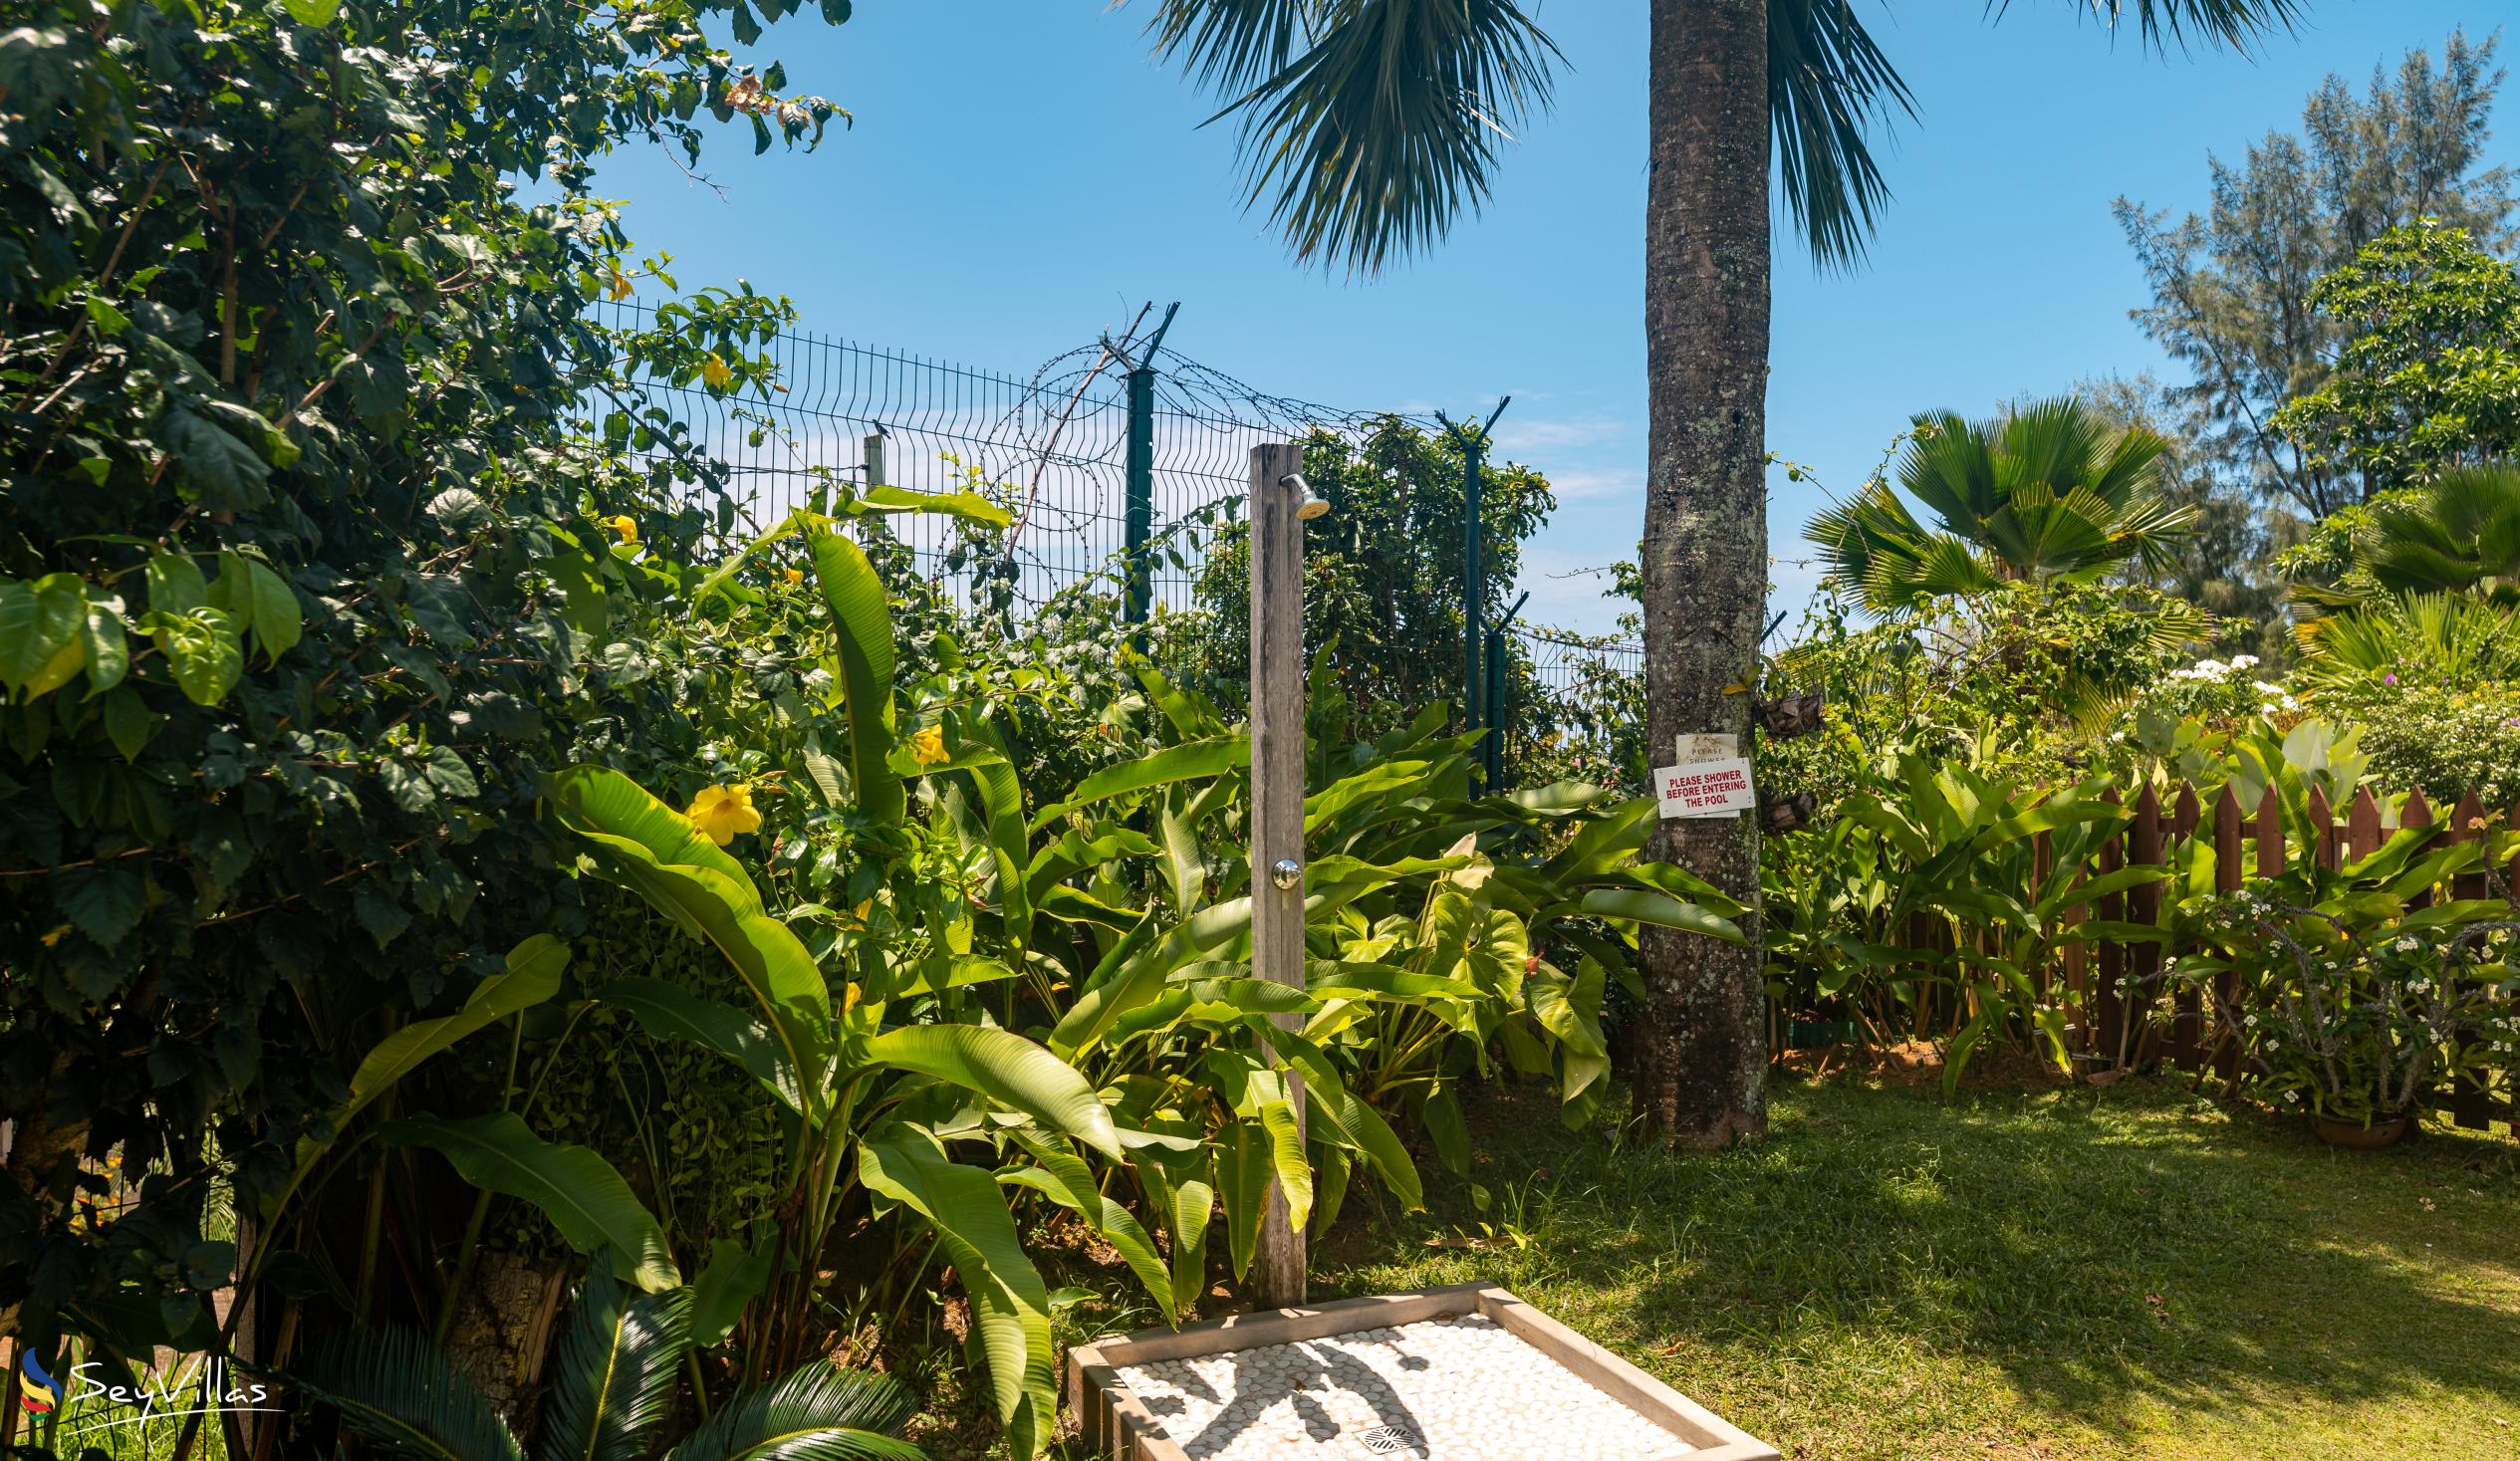 Photo 16: Residence Monte Cristo - Outdoor area - Mahé (Seychelles)